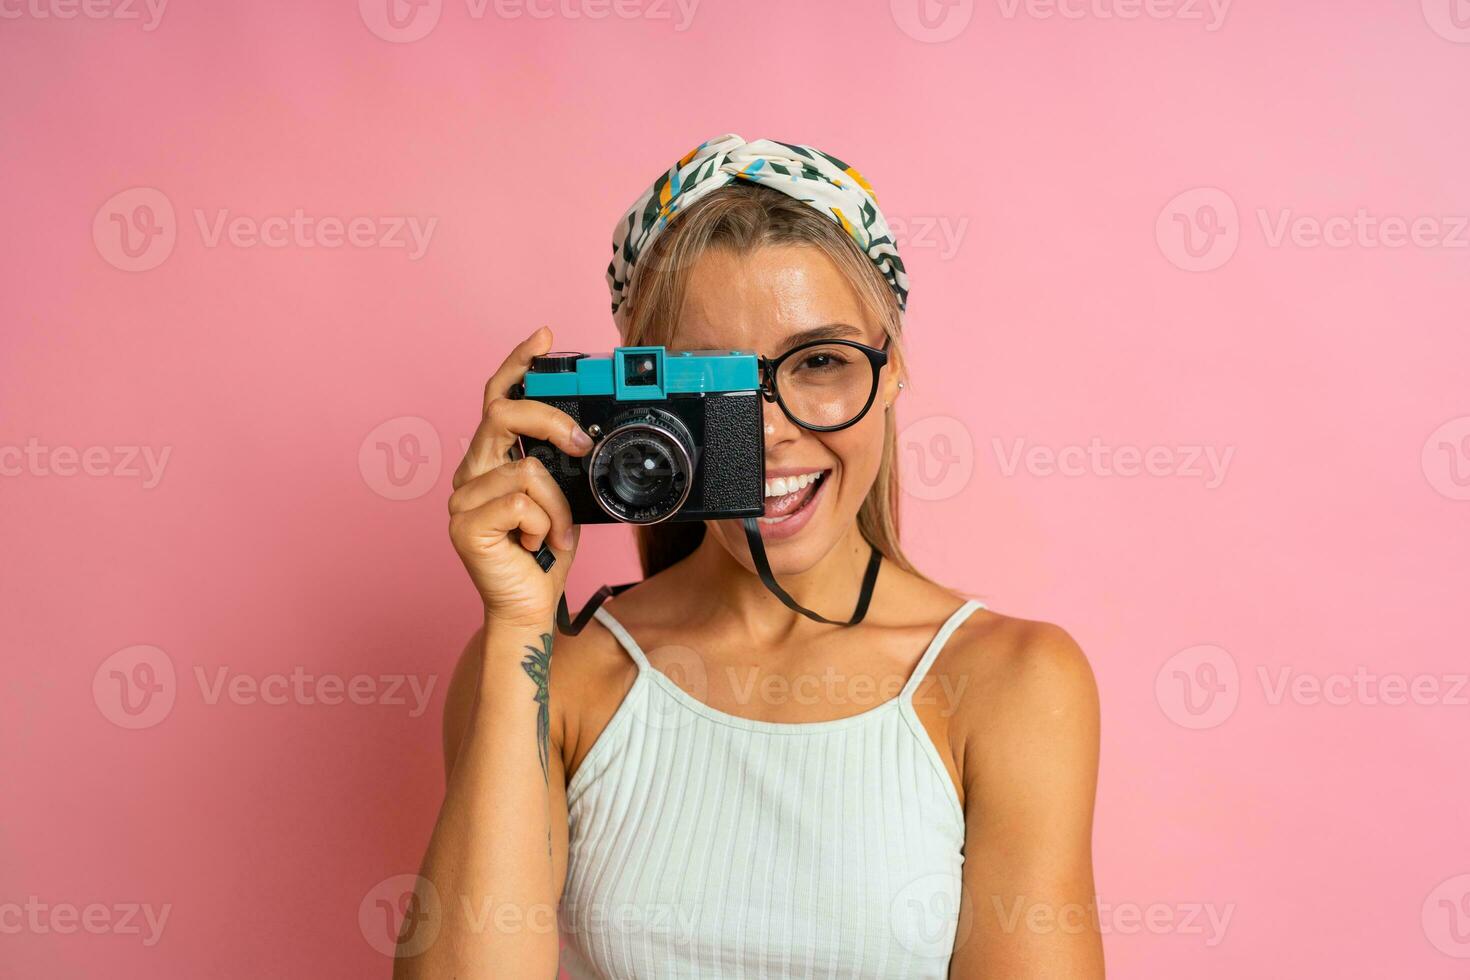 lachend blond vrouw Holding retro camera en poseren Aan roze achtergrond. reizen en zomer vakantie concept. foto